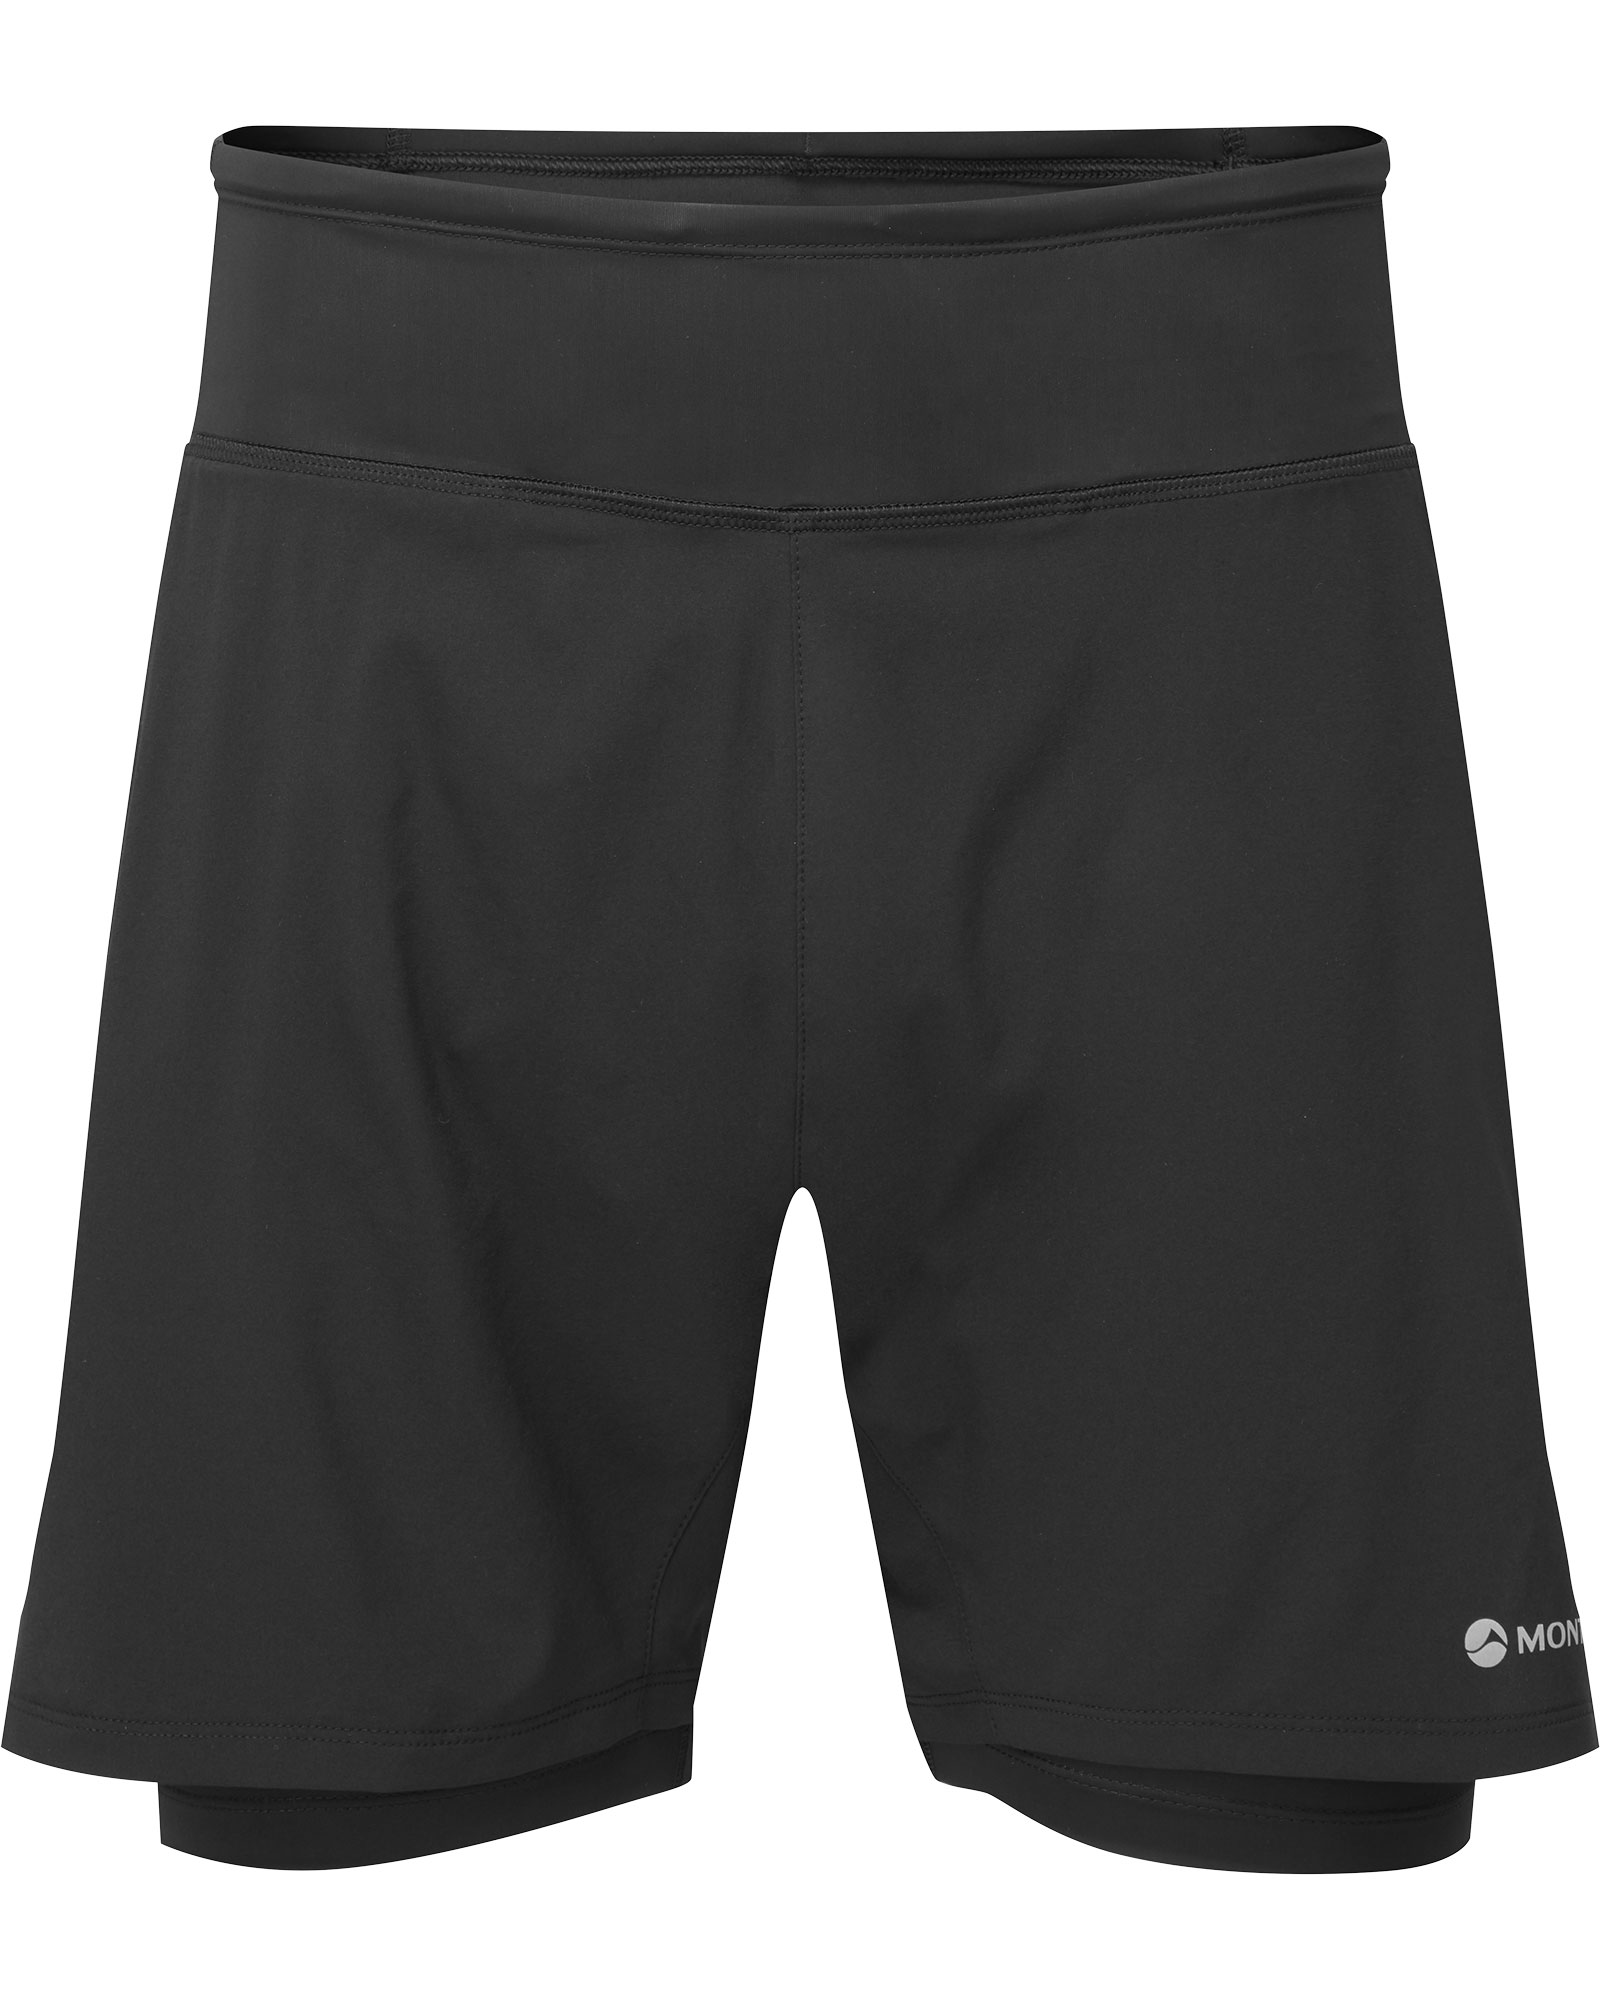 Montane Slipstream Men’s Twin Skin Shorts - black XL